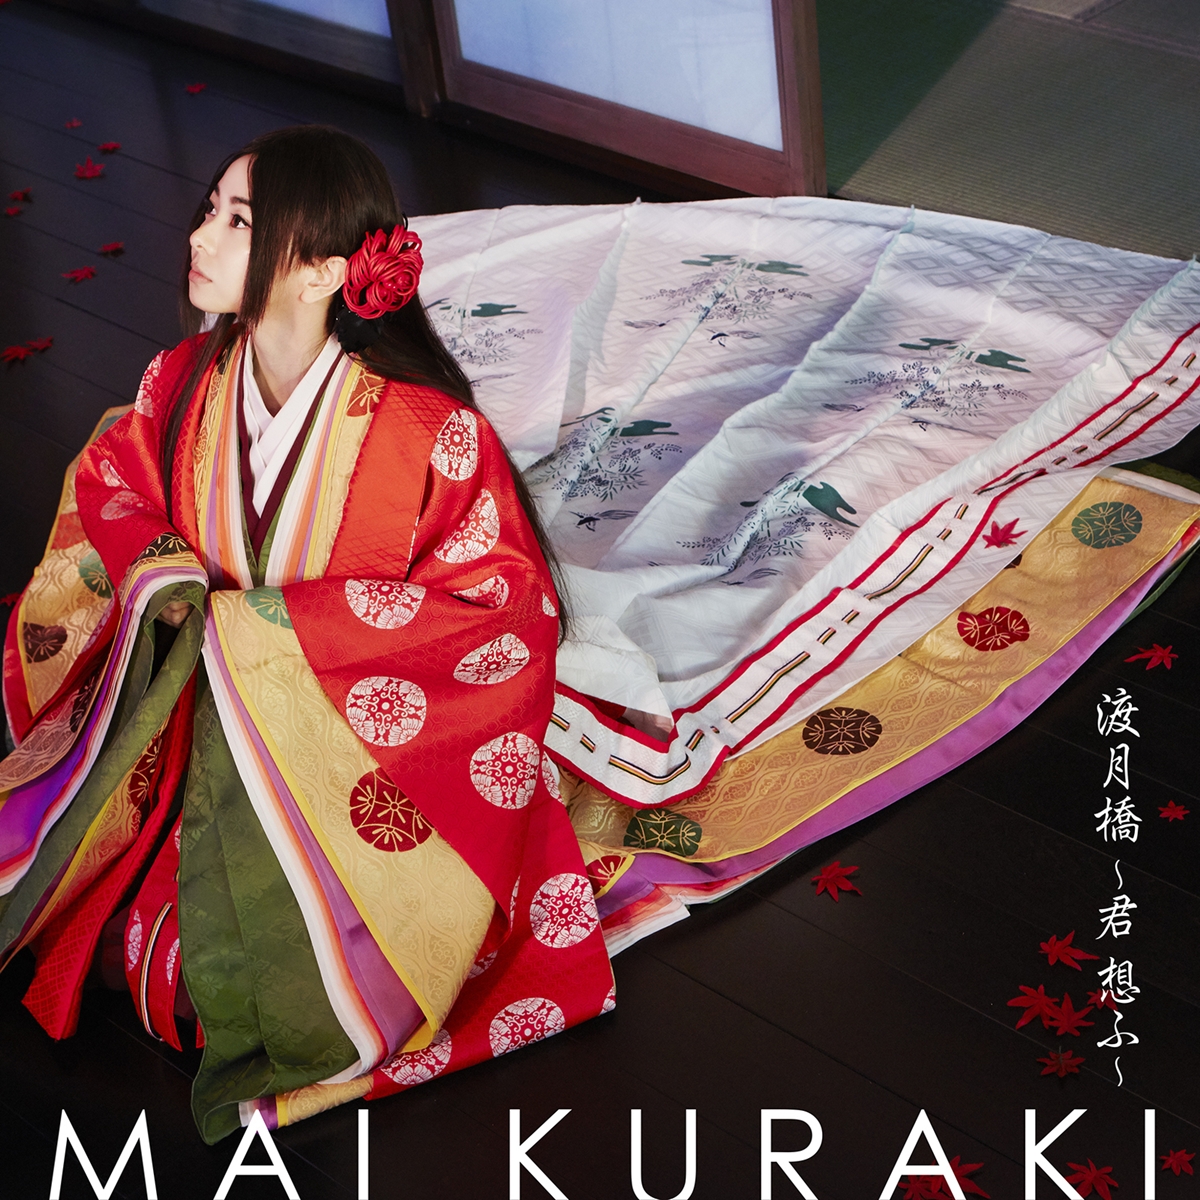 Cover art for『Mai Kuraki - 渡月橋 〜君 想ふ〜』from the release『Togetsukyou ~Kimi Omou~